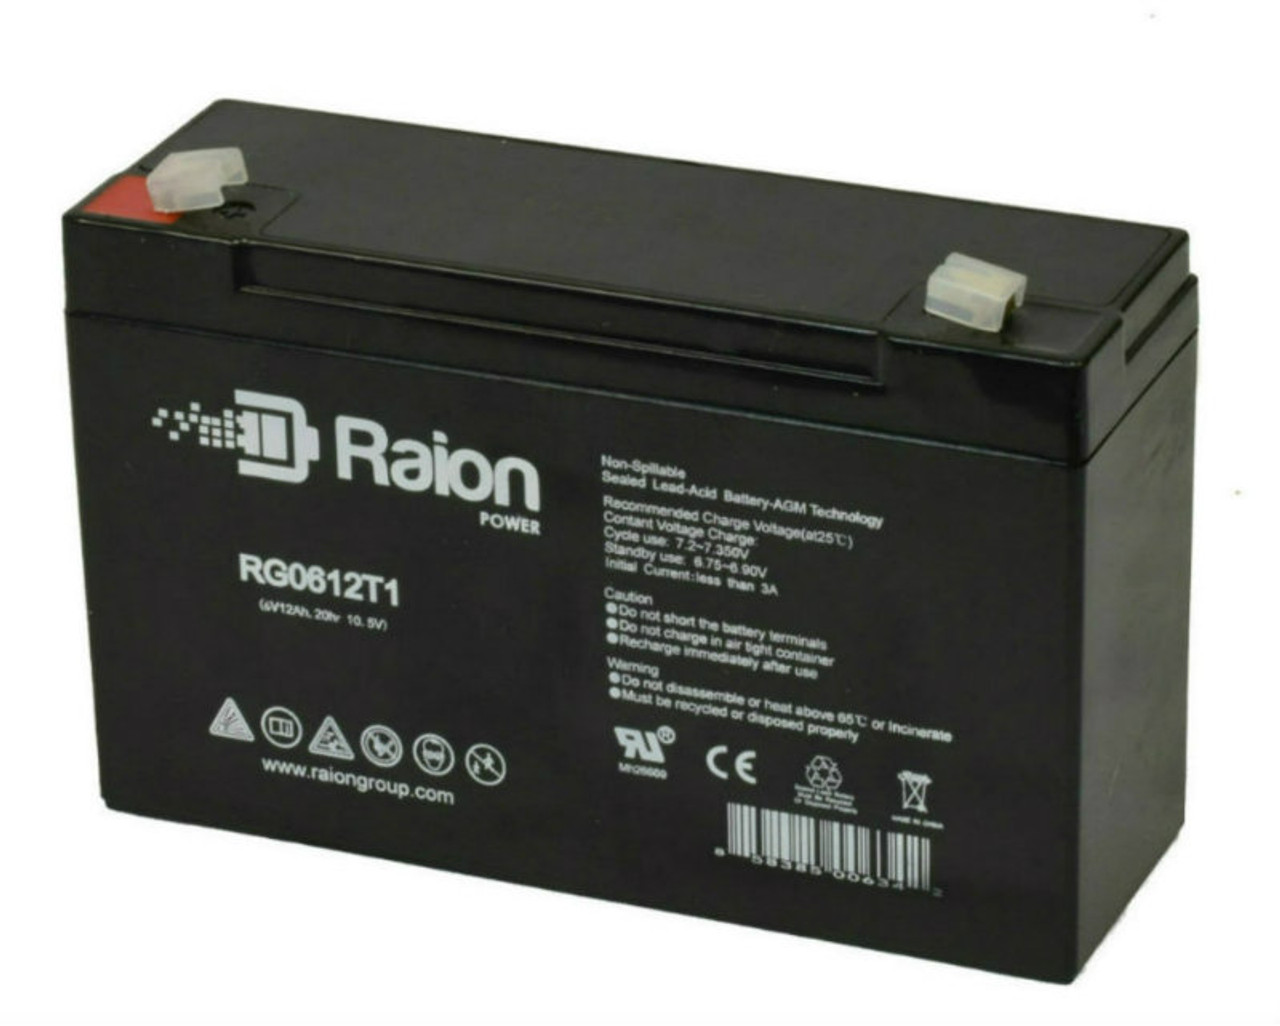 Raion Power RG06120T1 Replacement 6V 12Ah Emergency Light Battery for Sonnenschein Q100